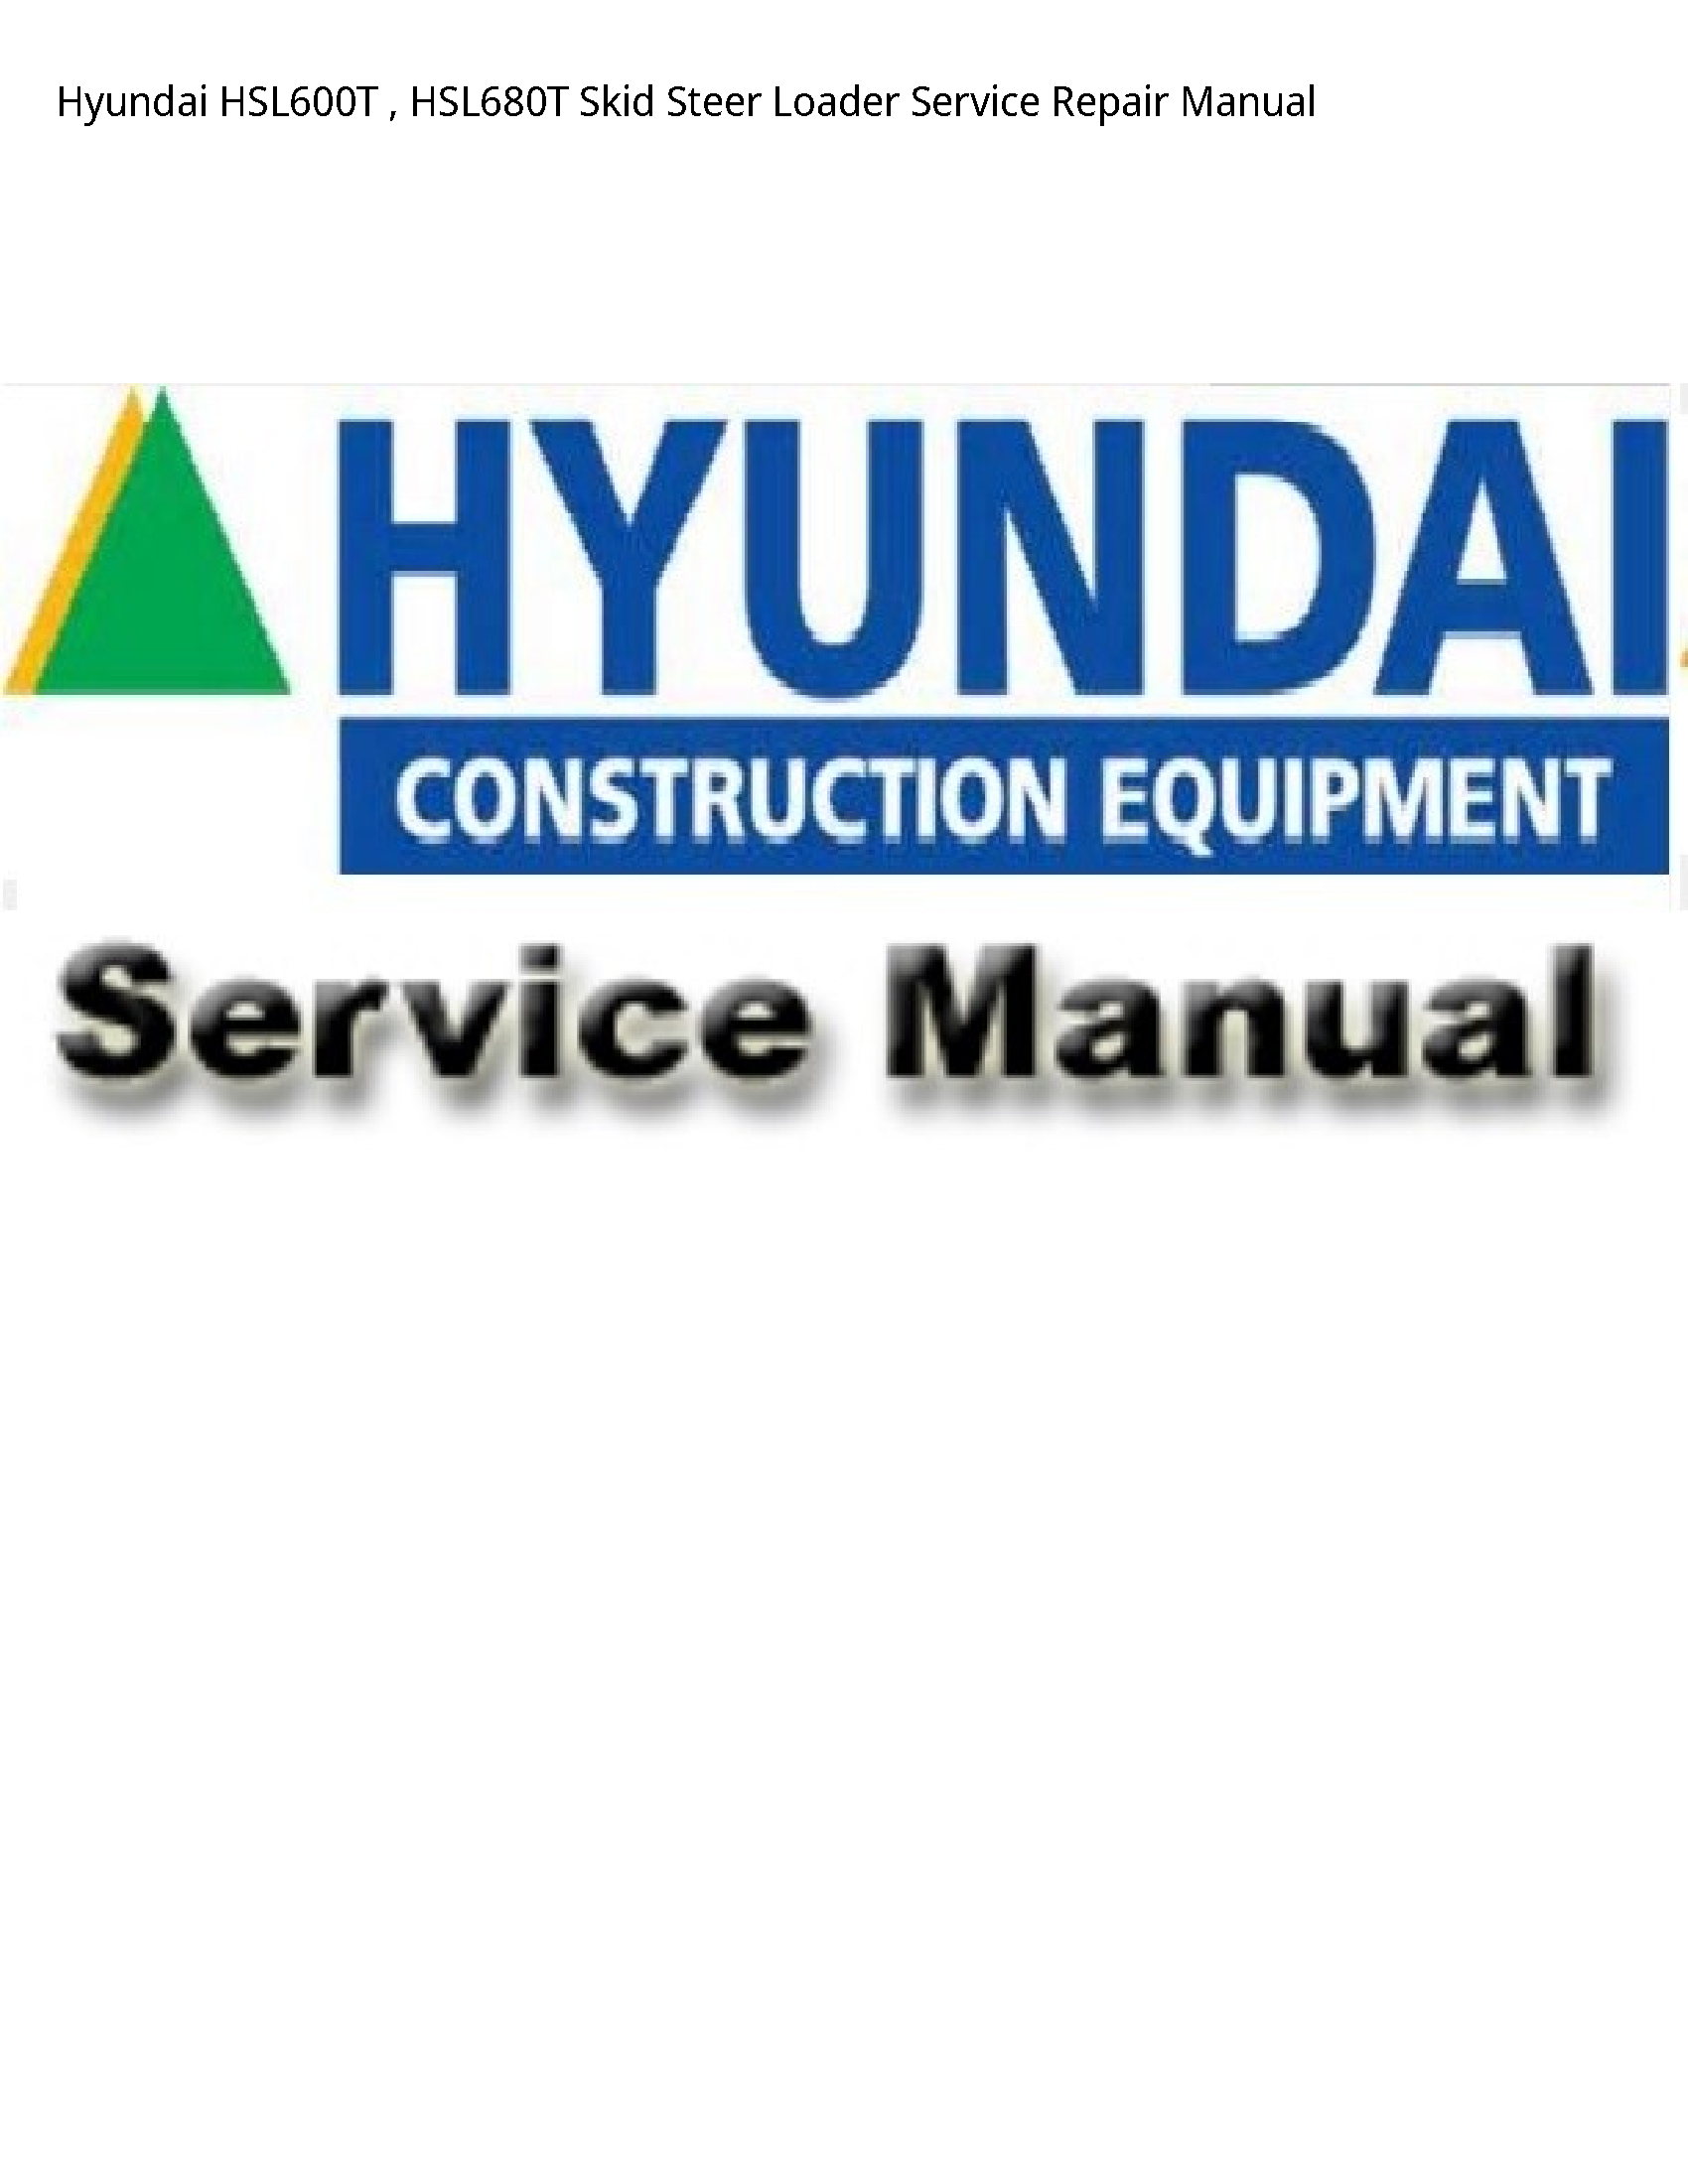 Hyundai HSL600T Skid Steer Loader manual